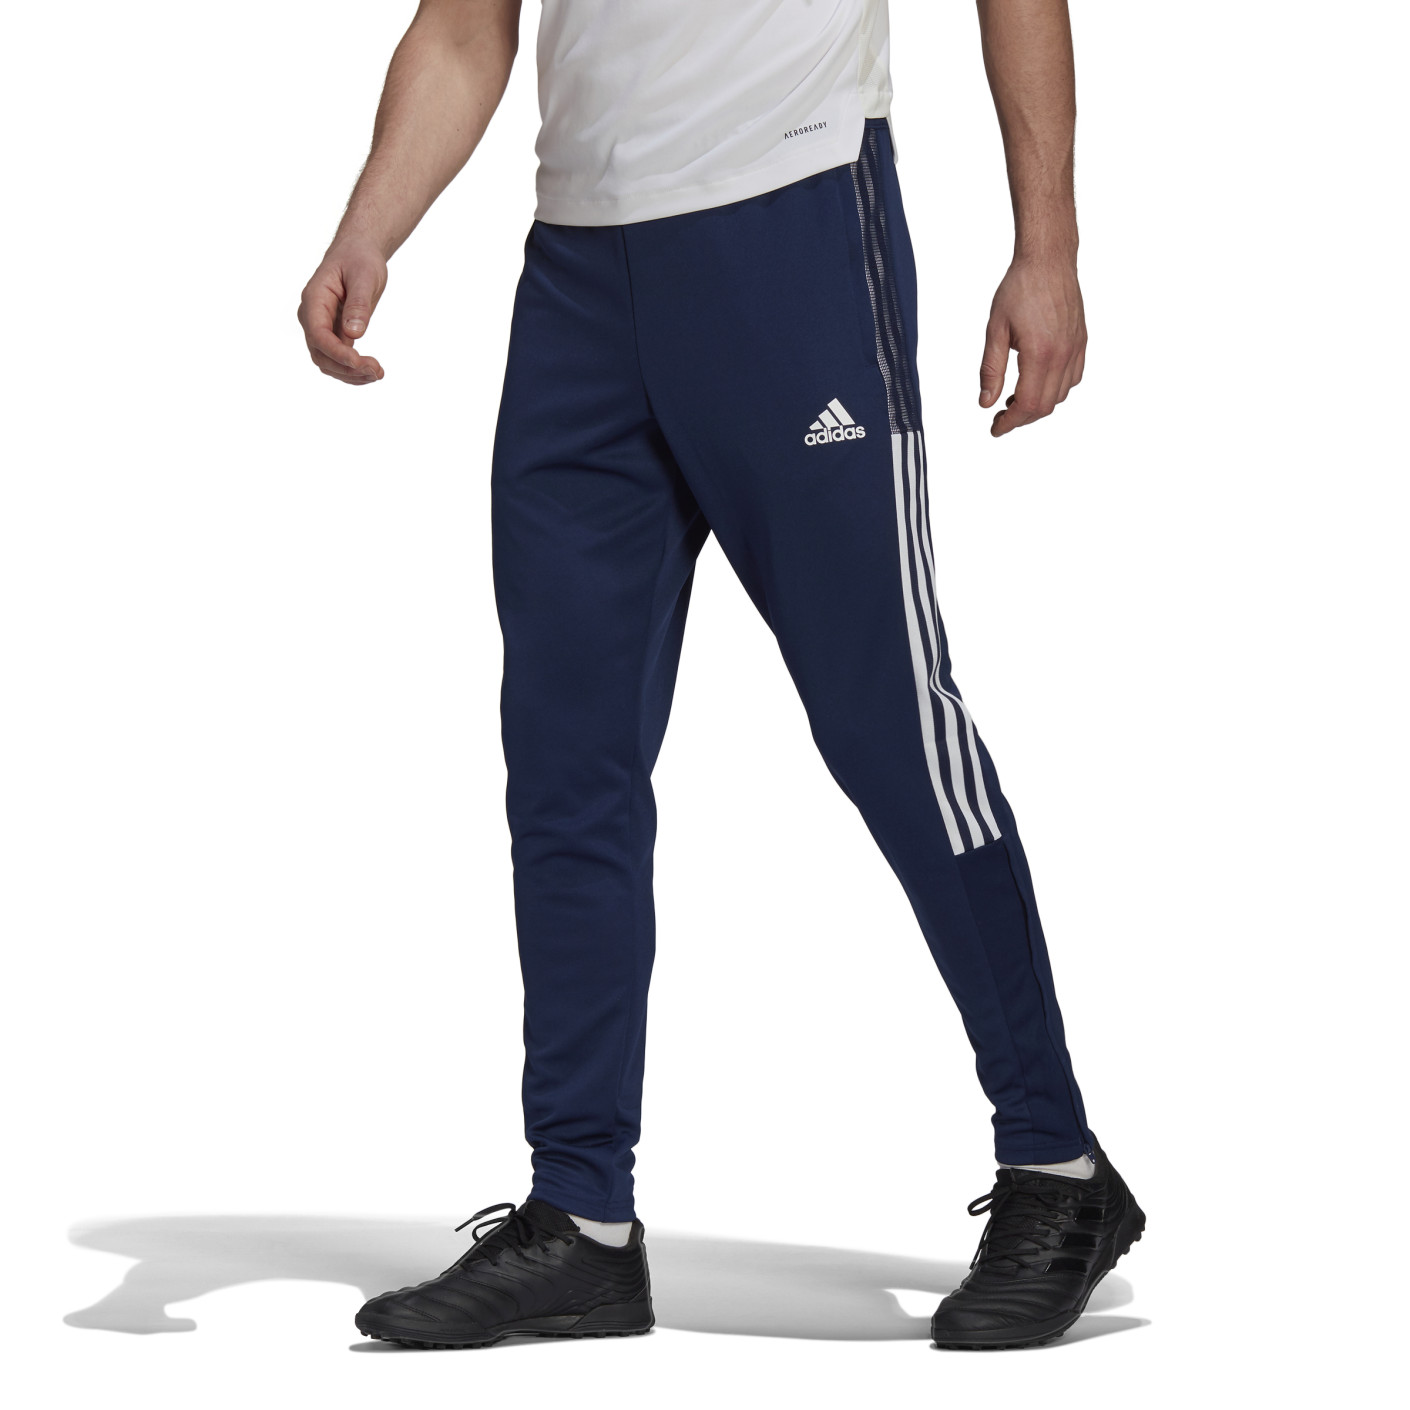 Pantalon de survêtement adidas Tiro 21 Track Bleu foncé et blanc